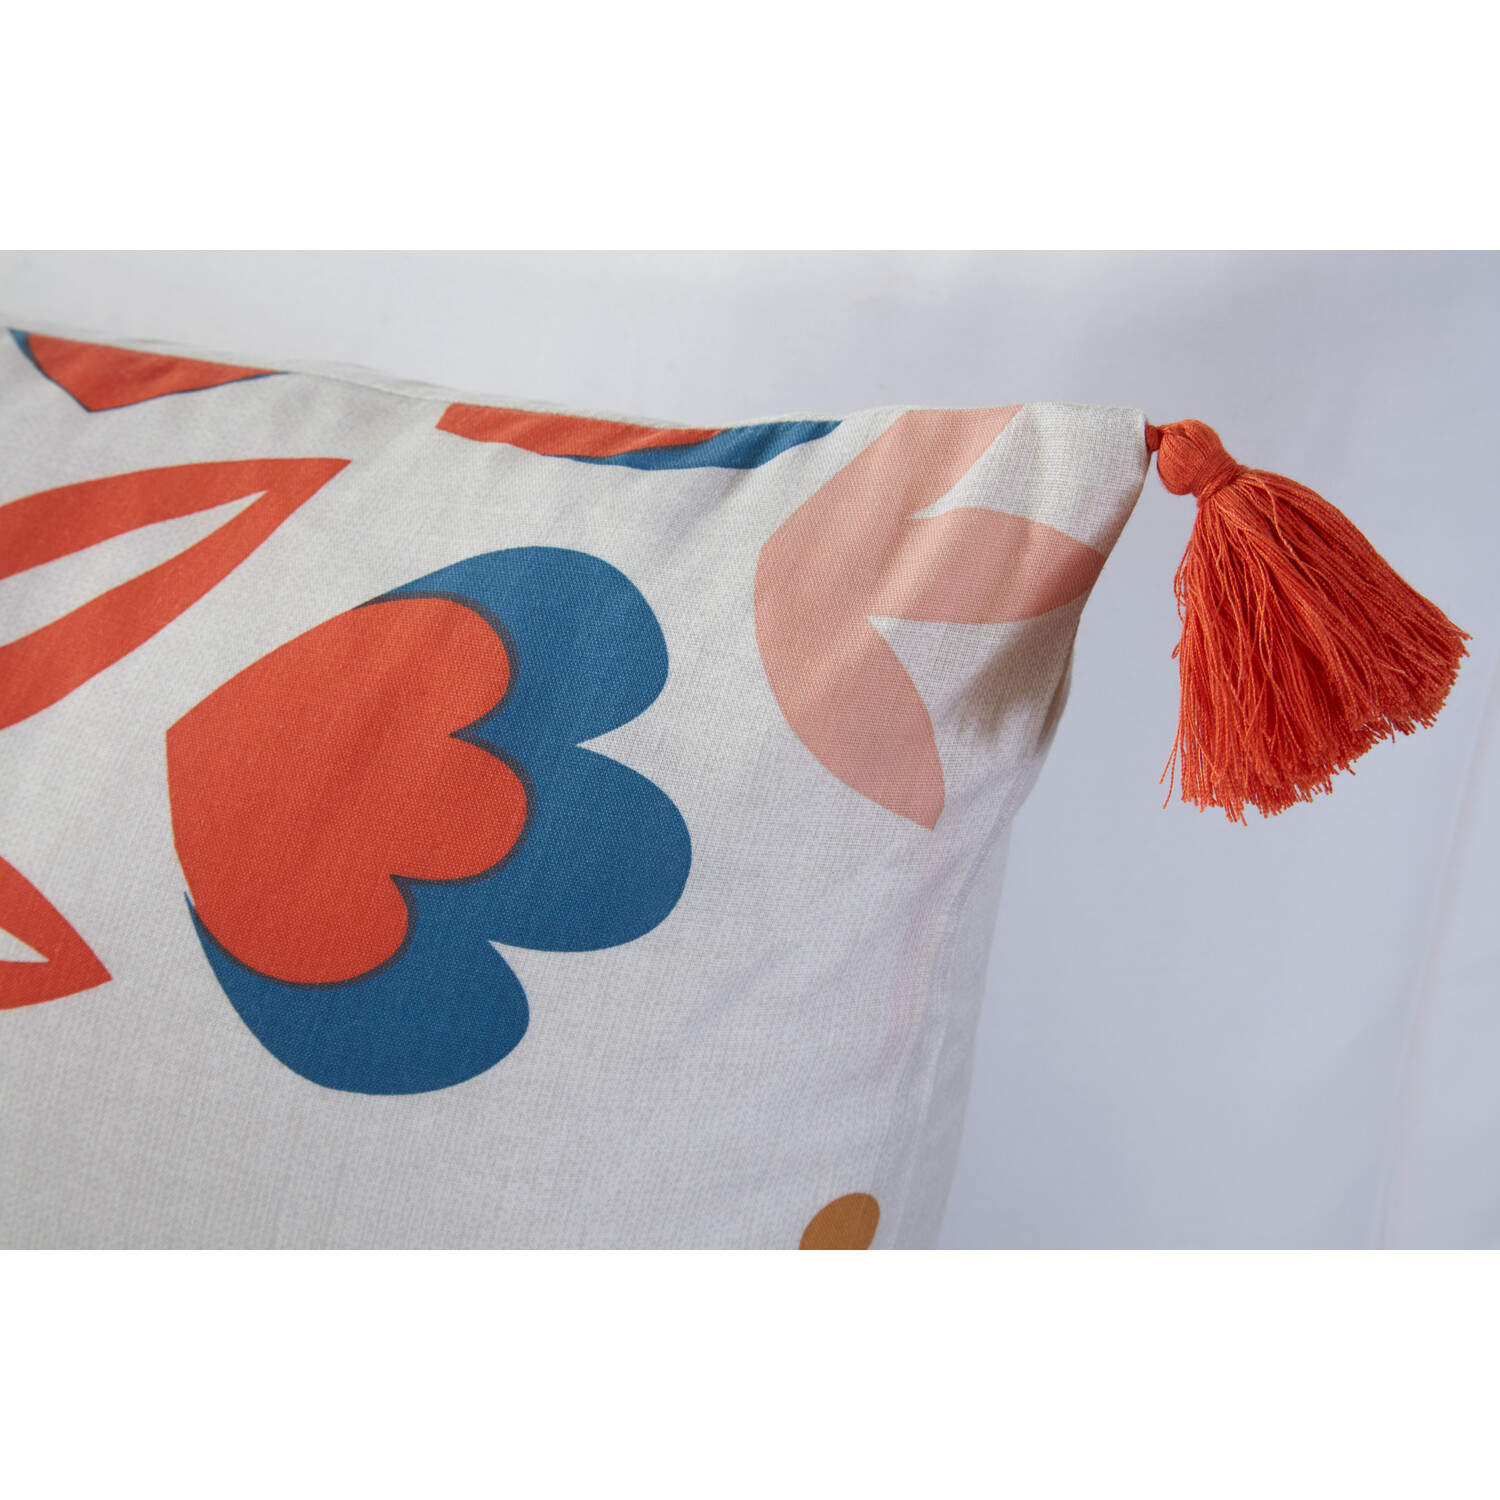 Amari Floral Duvet Cover and Pillowcase Set - Superking Image 6